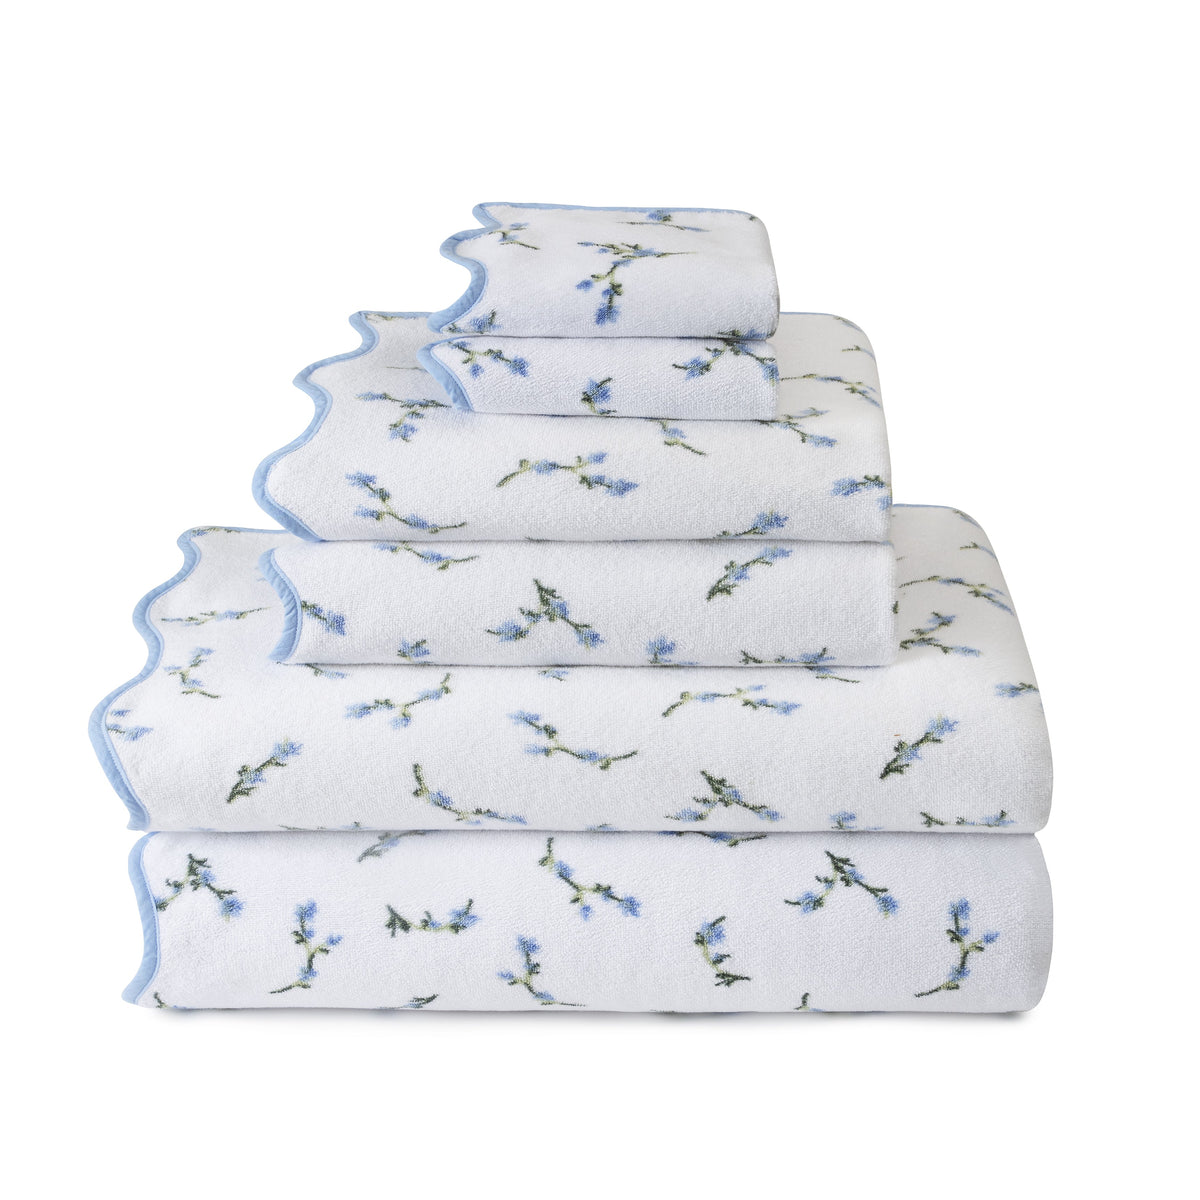 OTM For Kassatex: Floral Scallop Towel